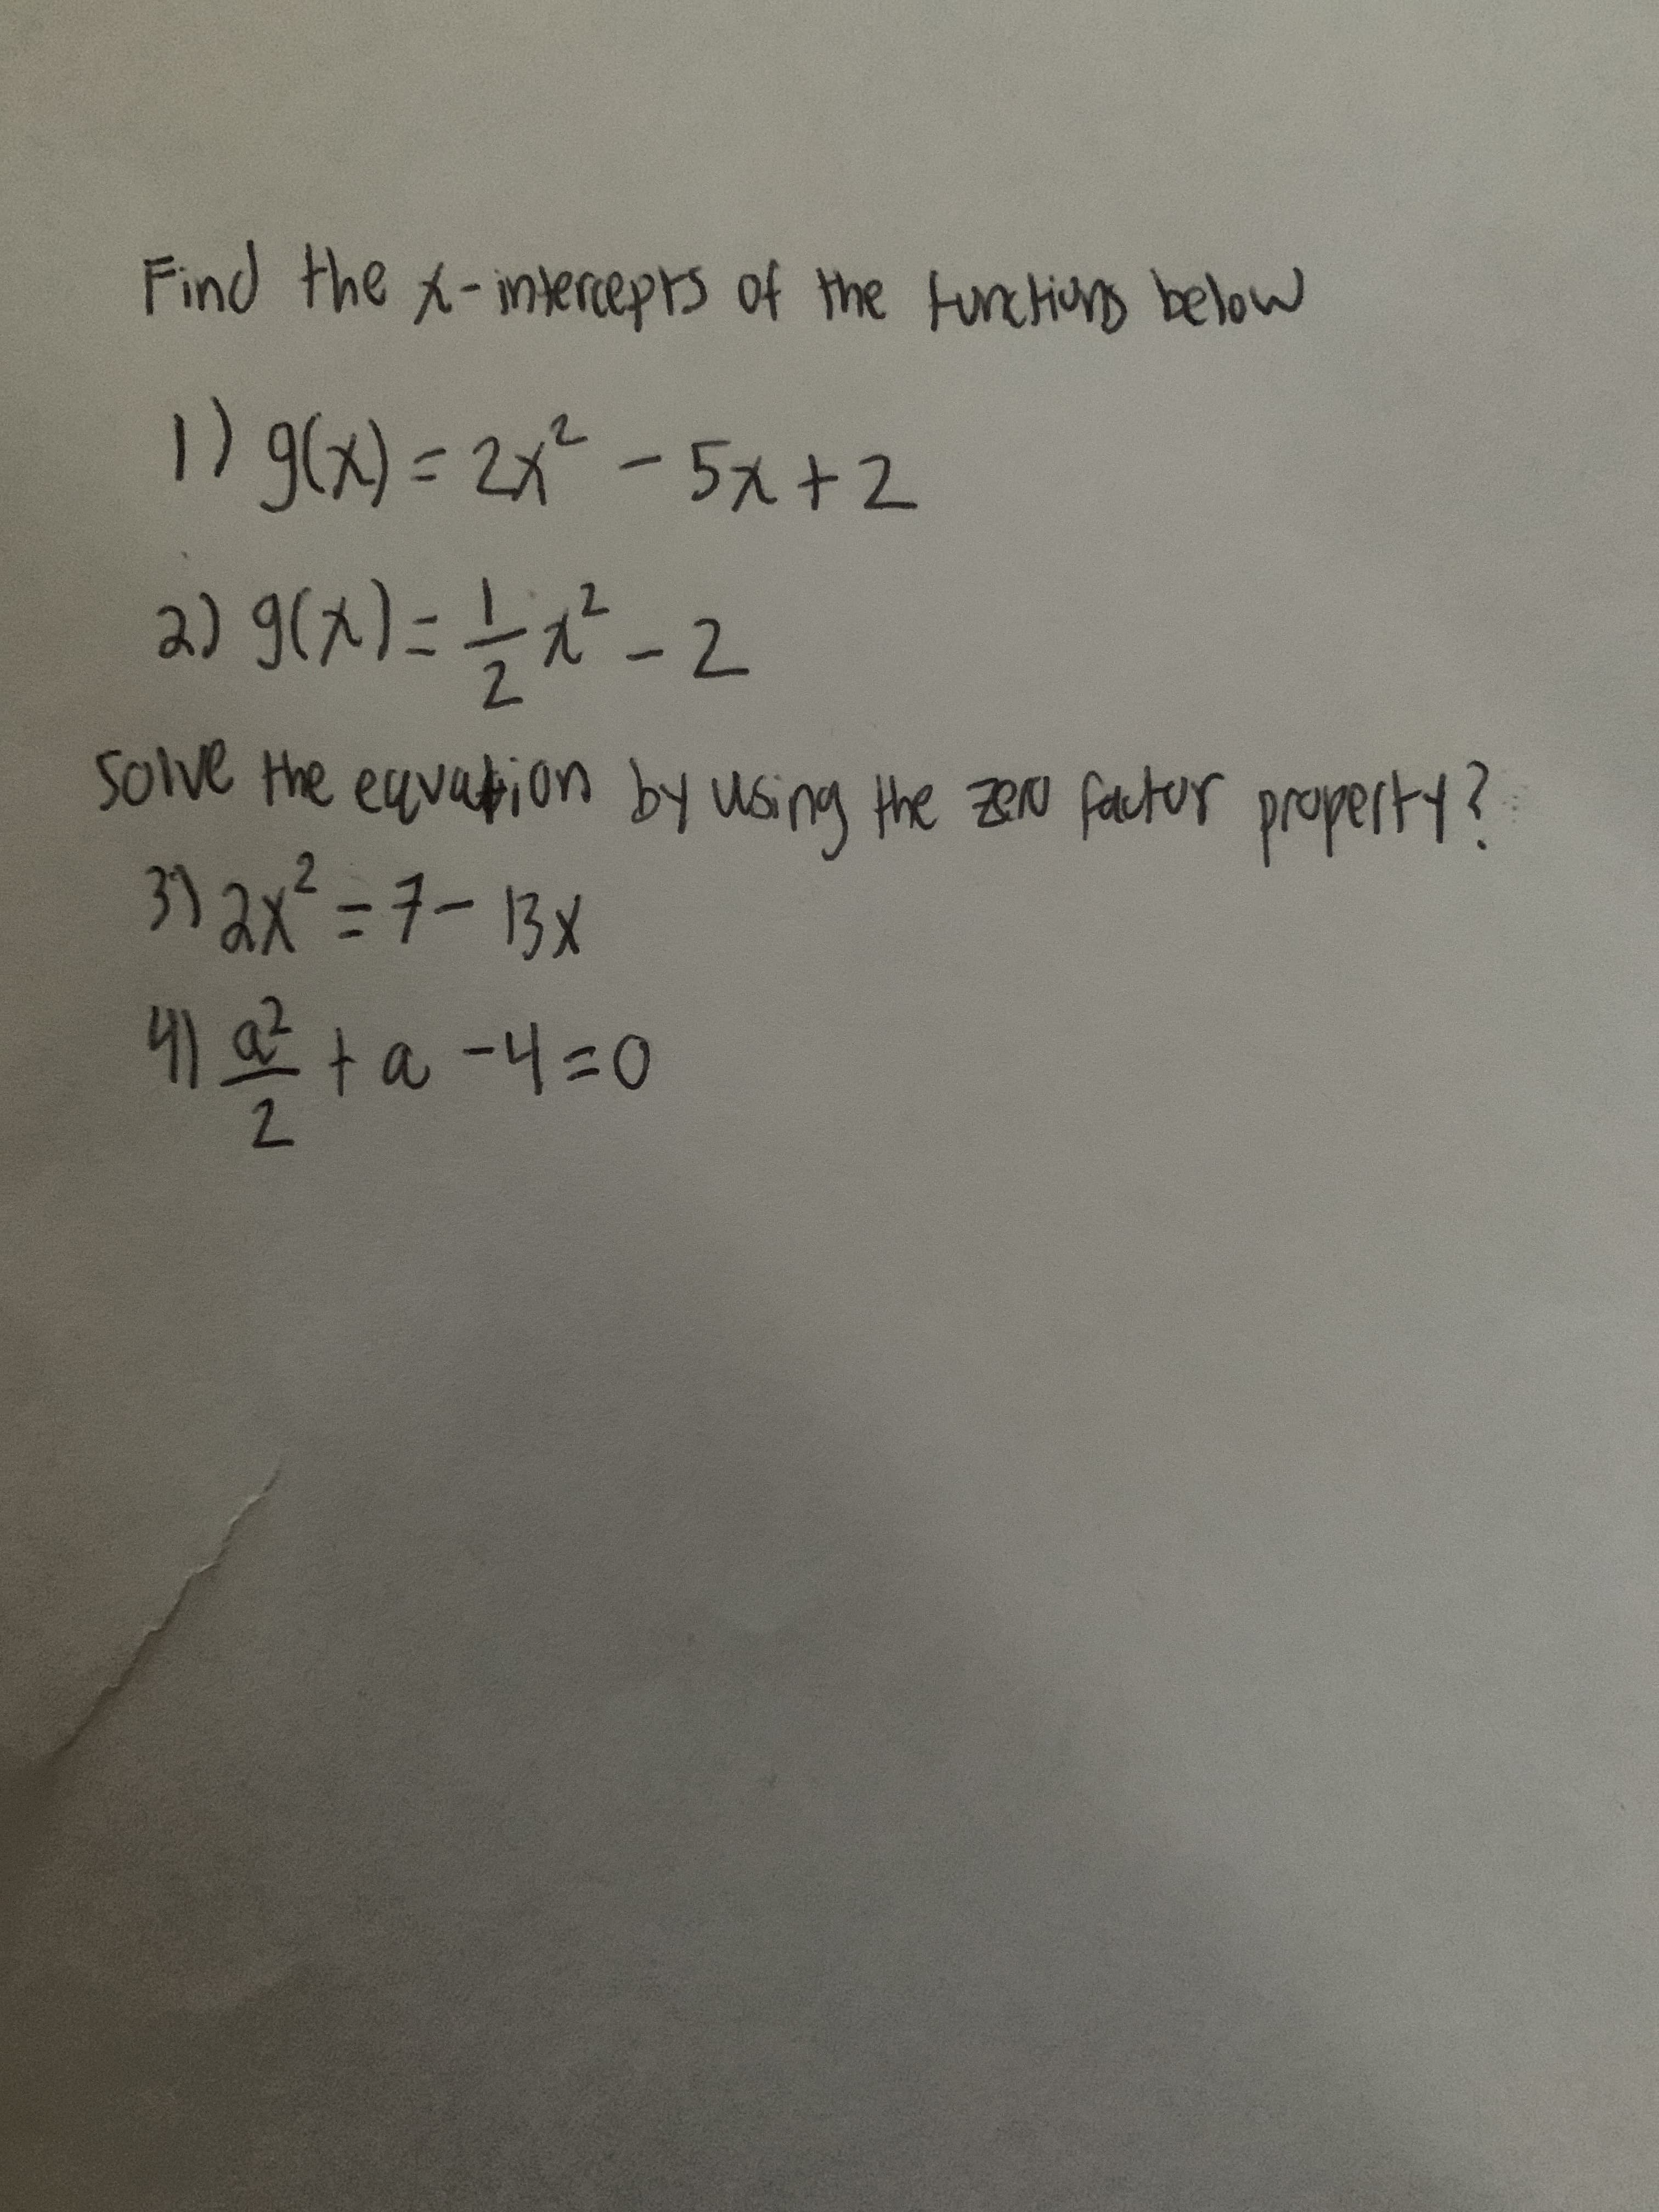 /2
1)96=21-5+2
2) 9(^) =a -2
2.
3) 2x² =D7-13x
4ta -4%30O
